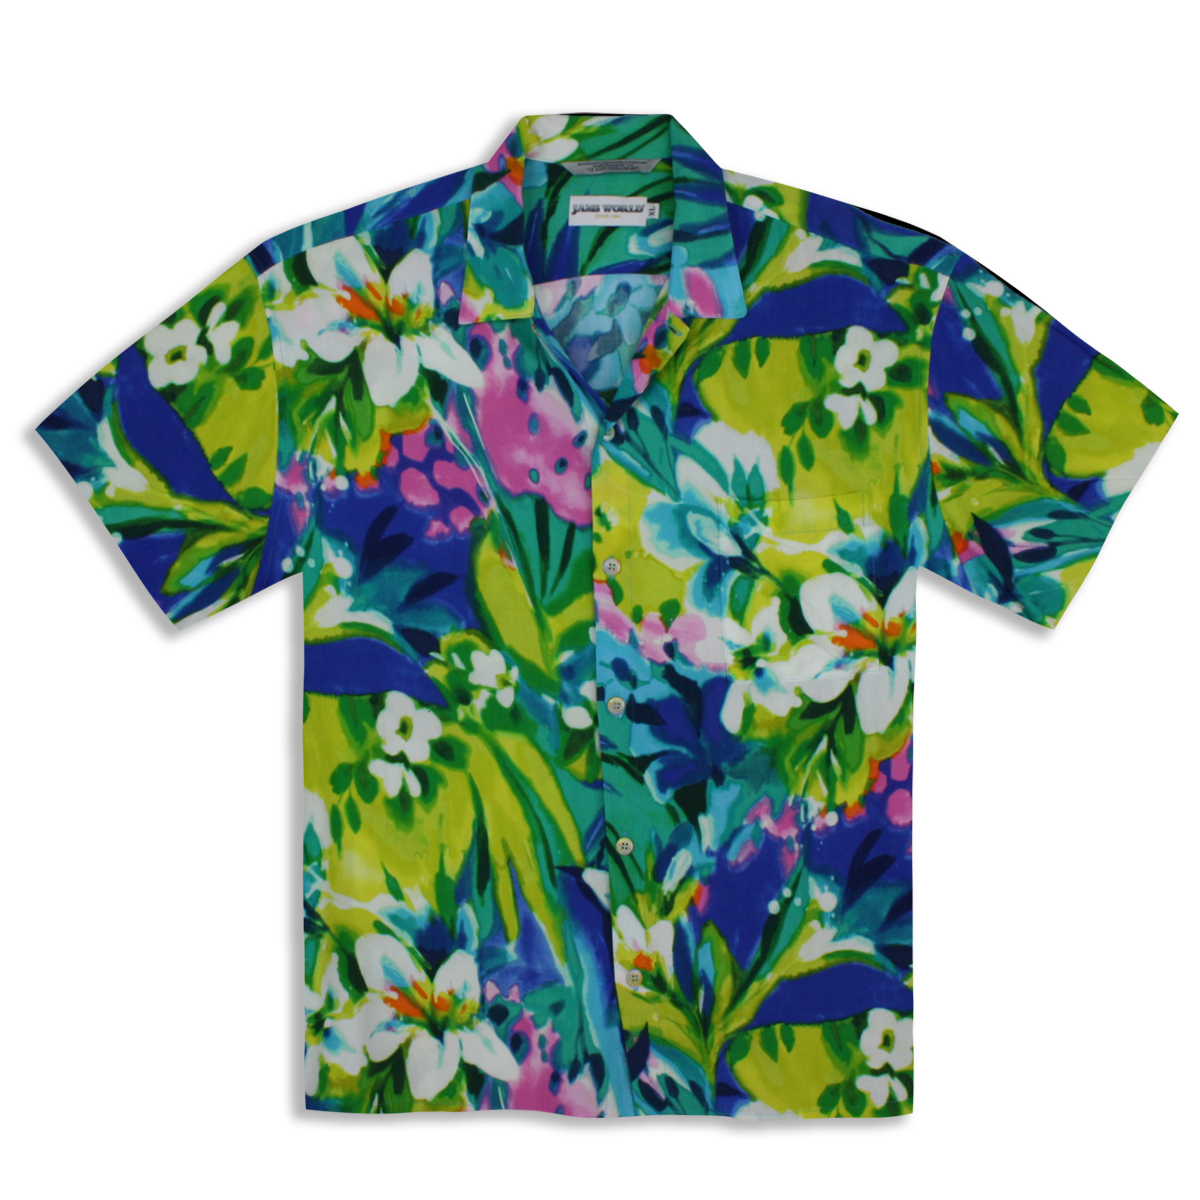 Kleding Herenkleding Overhemden & T-shirts Oxfords & Buttondowns NOS Vtg Hawaiian Jams World 30th Anniversary Collector's Edition Shirt XL BOLD 